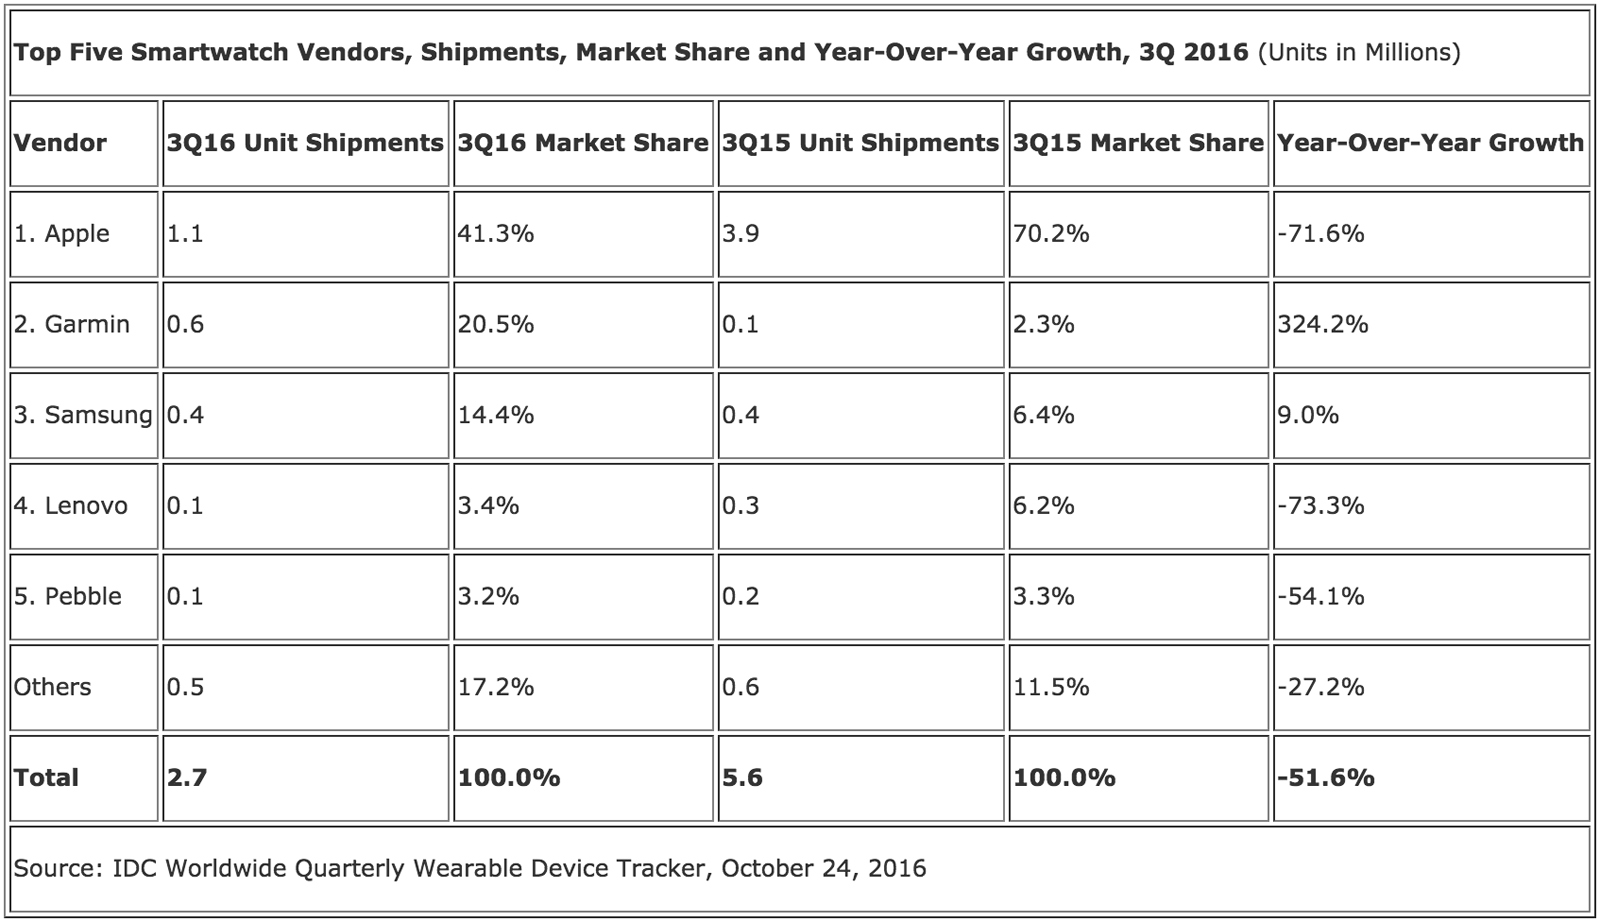 IDC's smartwatch market share estimates for Q3 2016